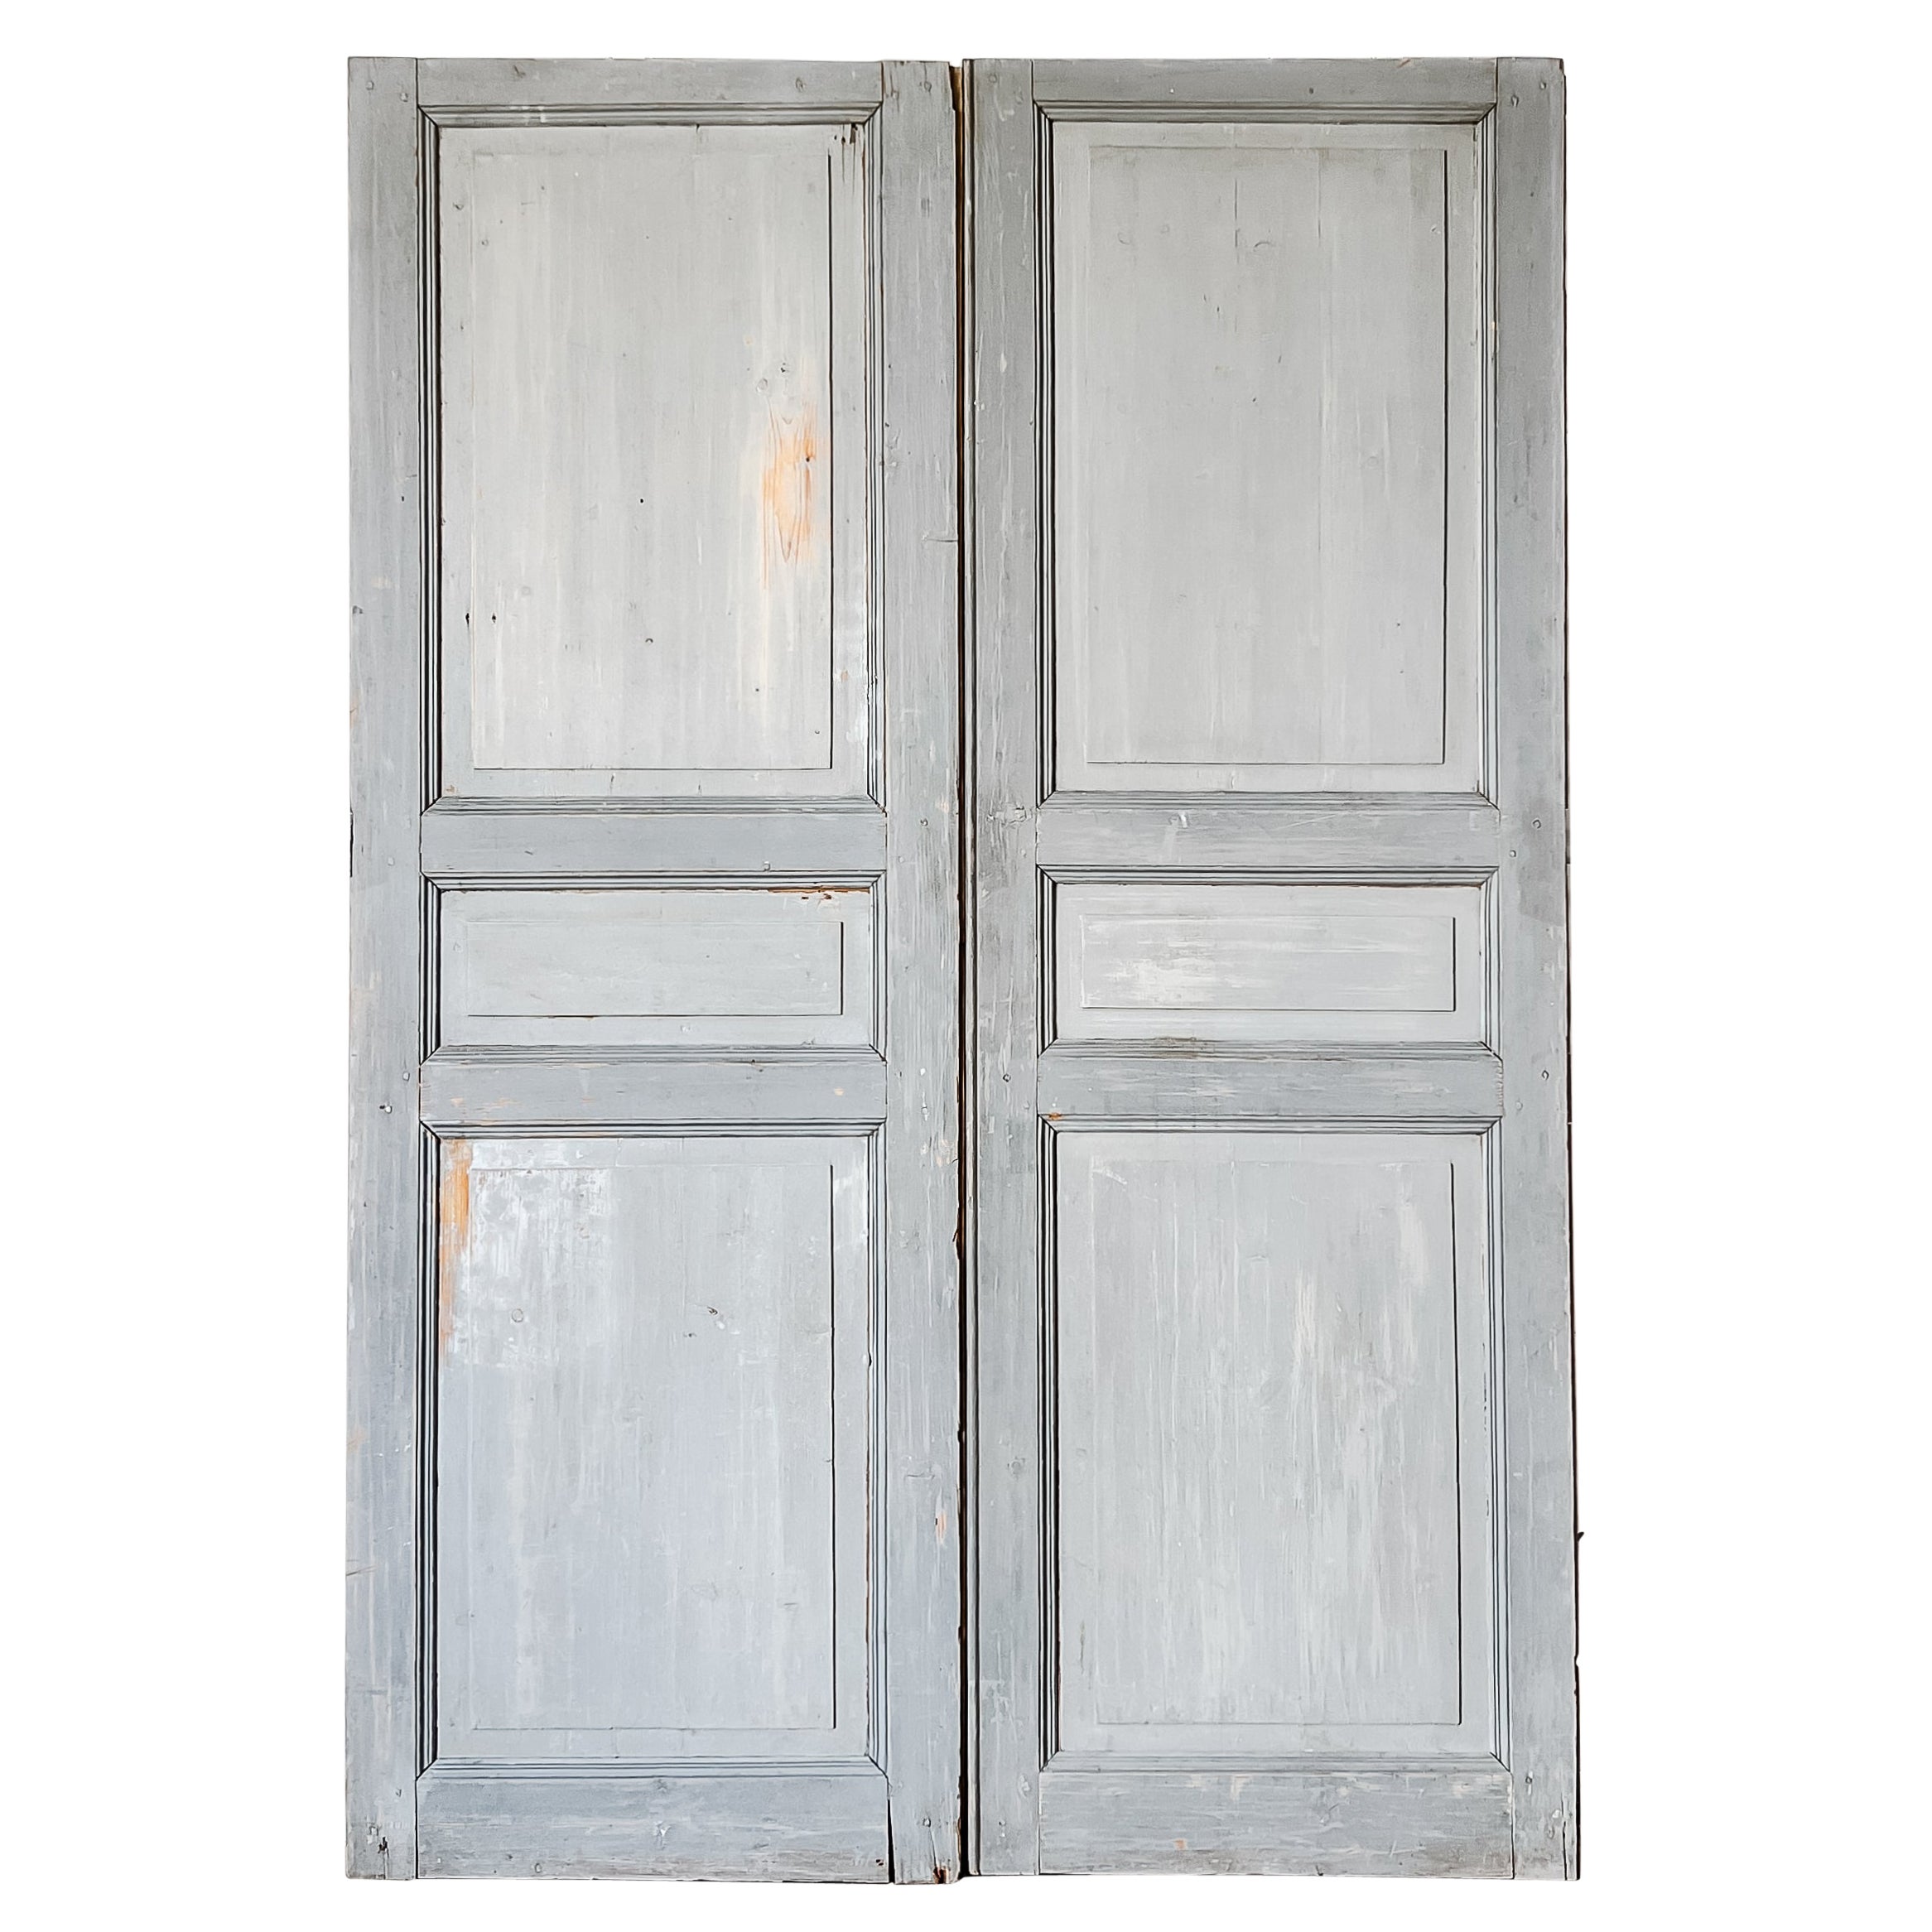 Pair of 19th Century 3 Panel French Wardrobe Doors